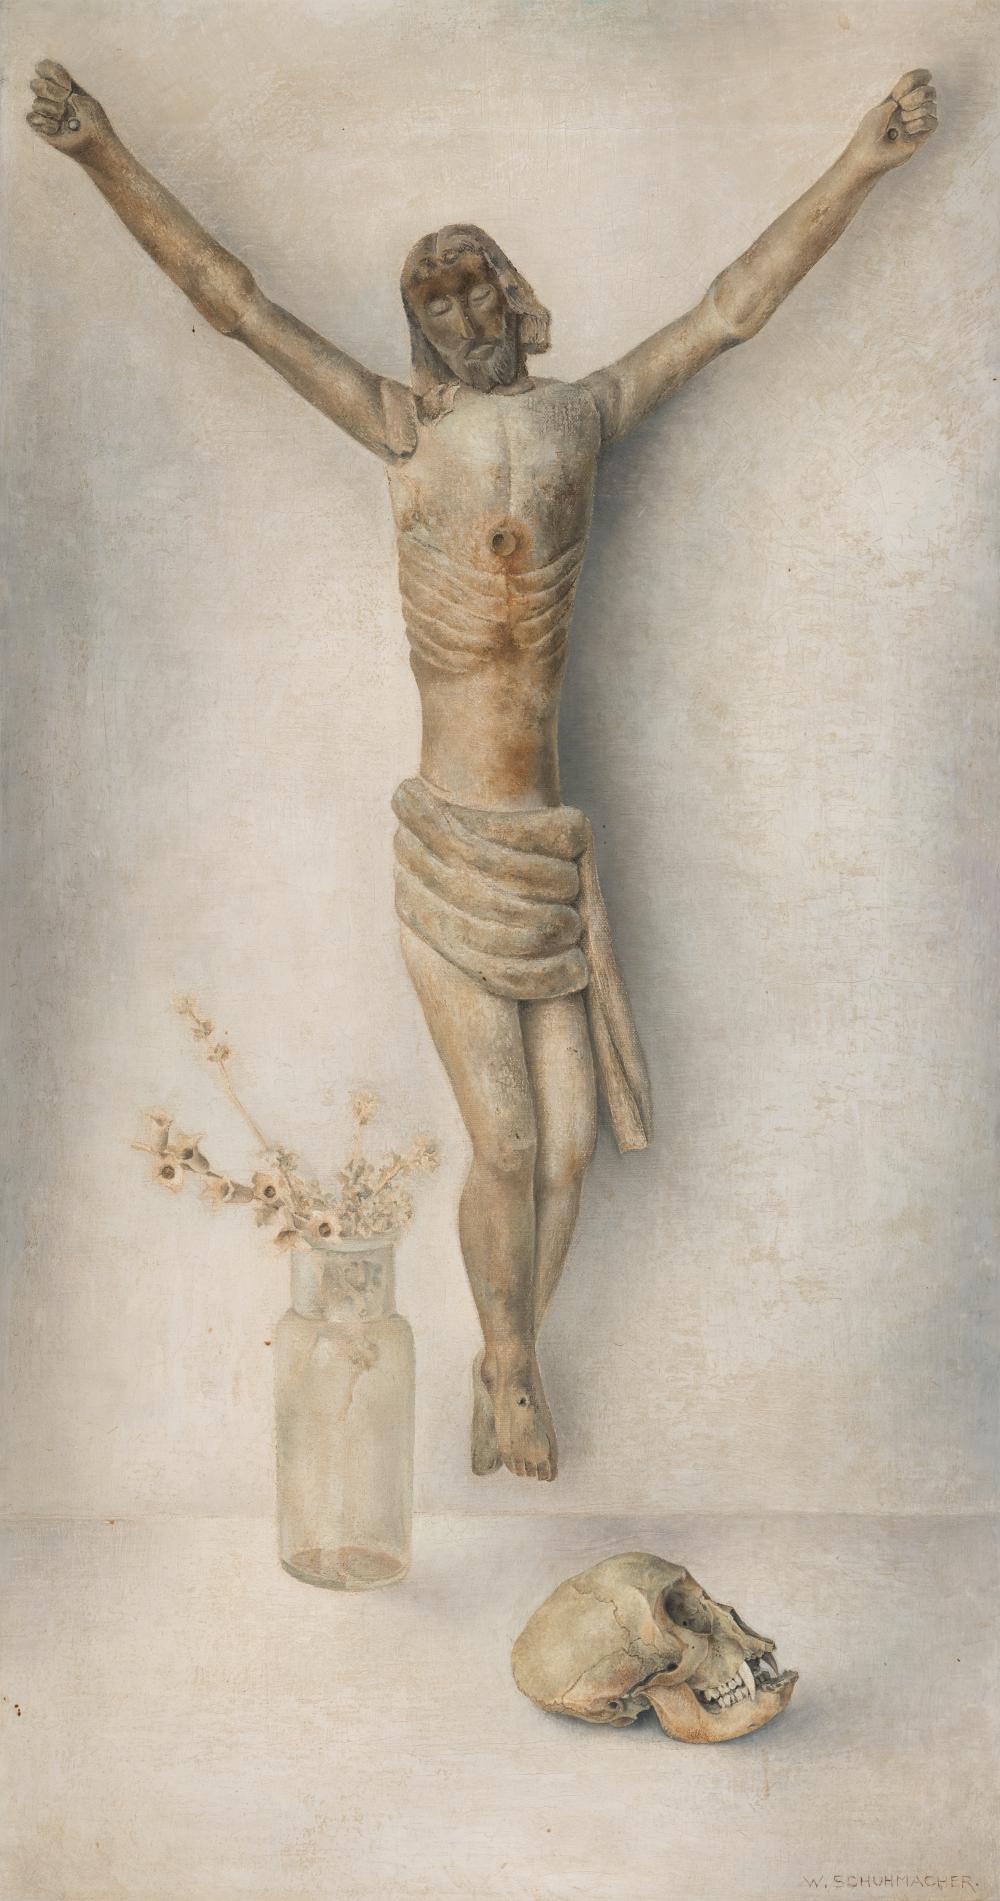 Stilleven met crucifix en apenschedel / Still life with crucifix and monkey skull (1937)